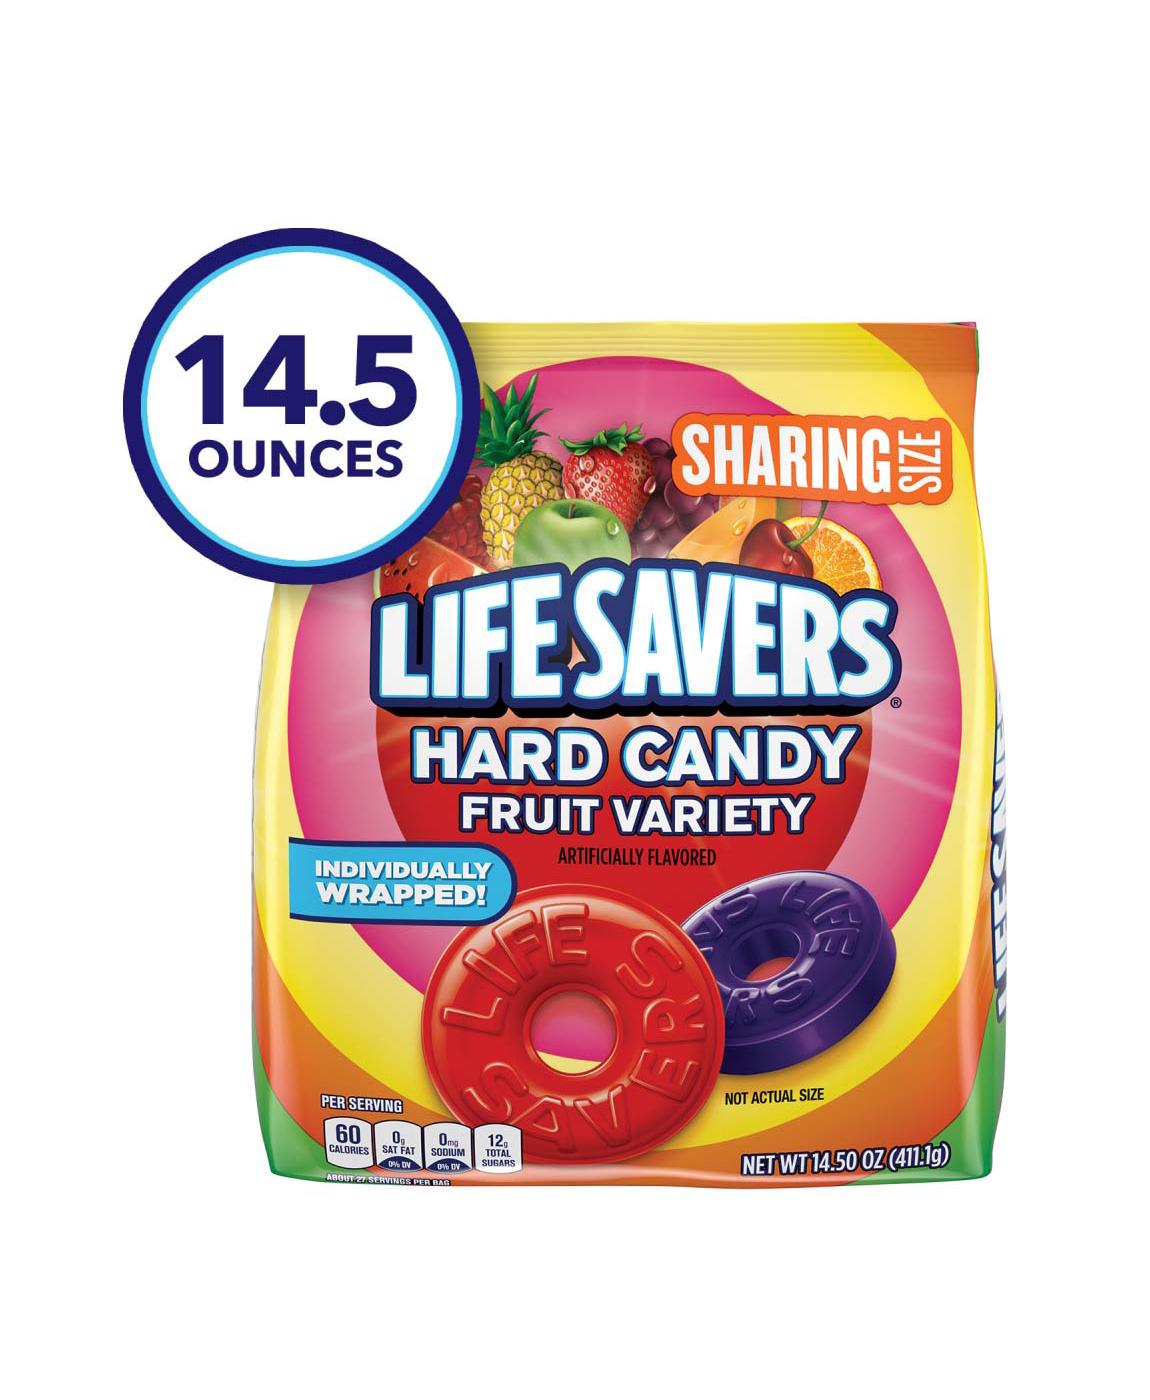 Life Savers Hard Candy Fruit Variety Sharing Size; image 8 of 8